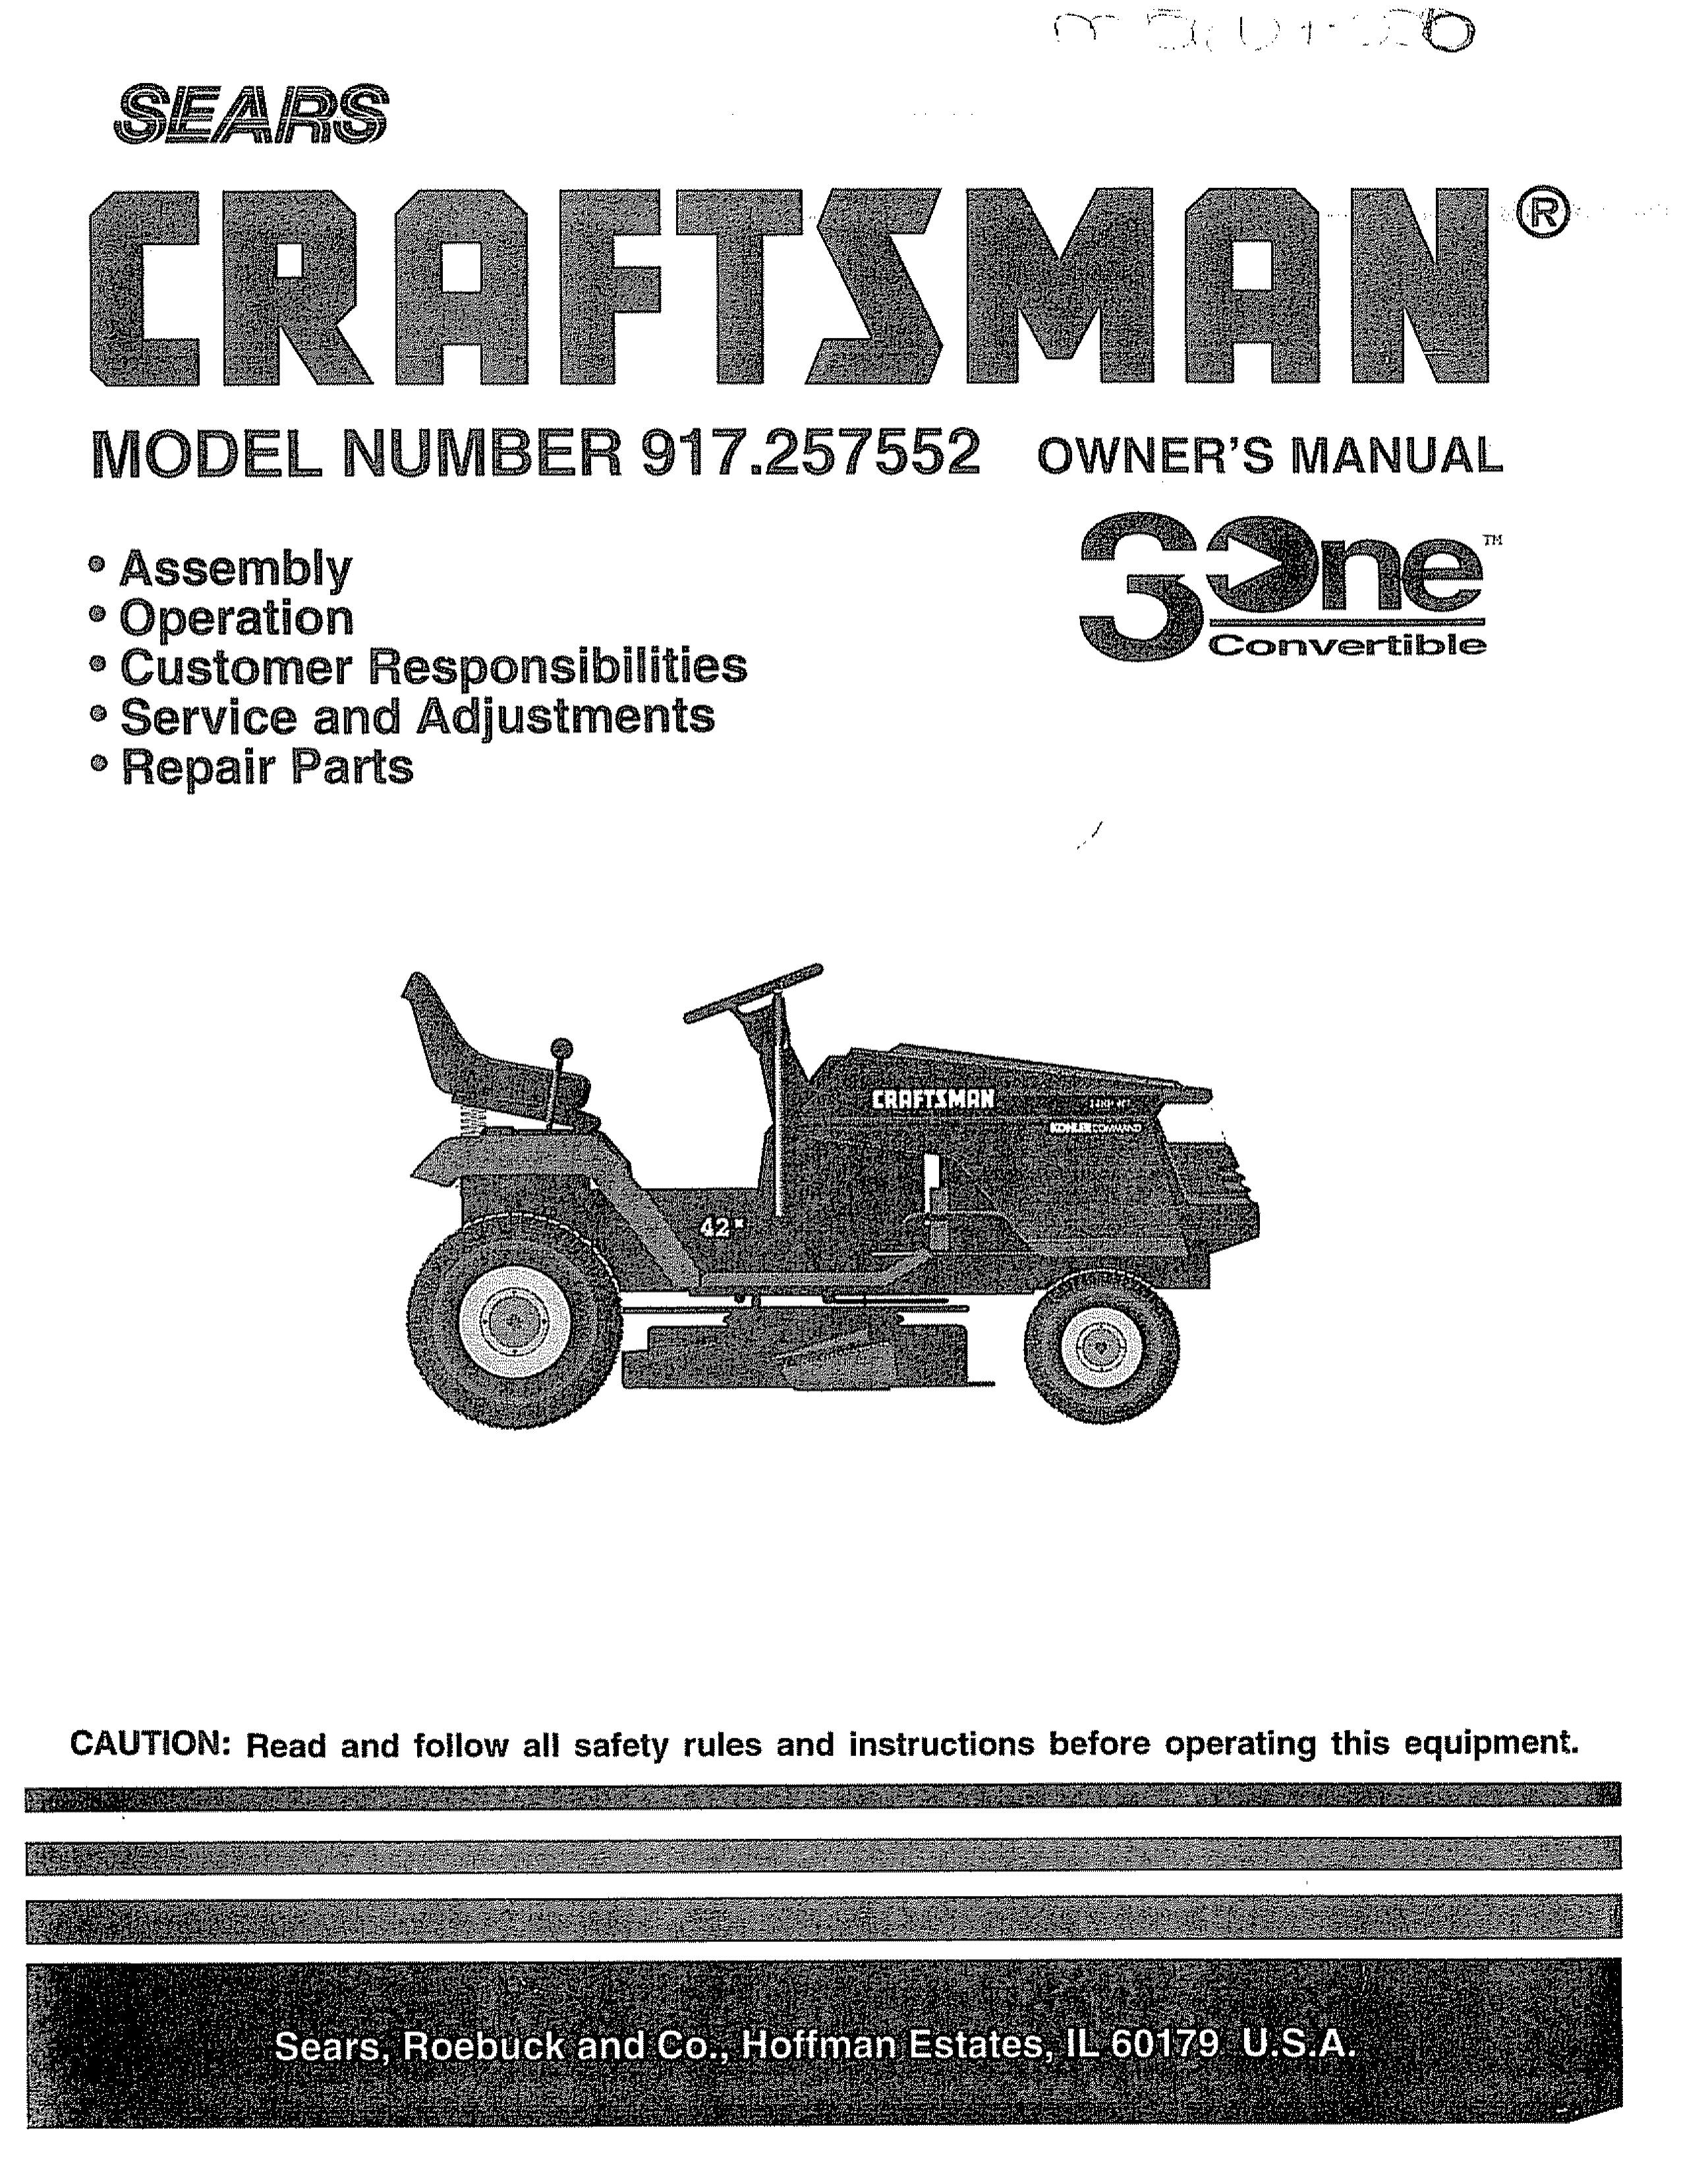 Sears 917.257552 Lawn Mower User Manual